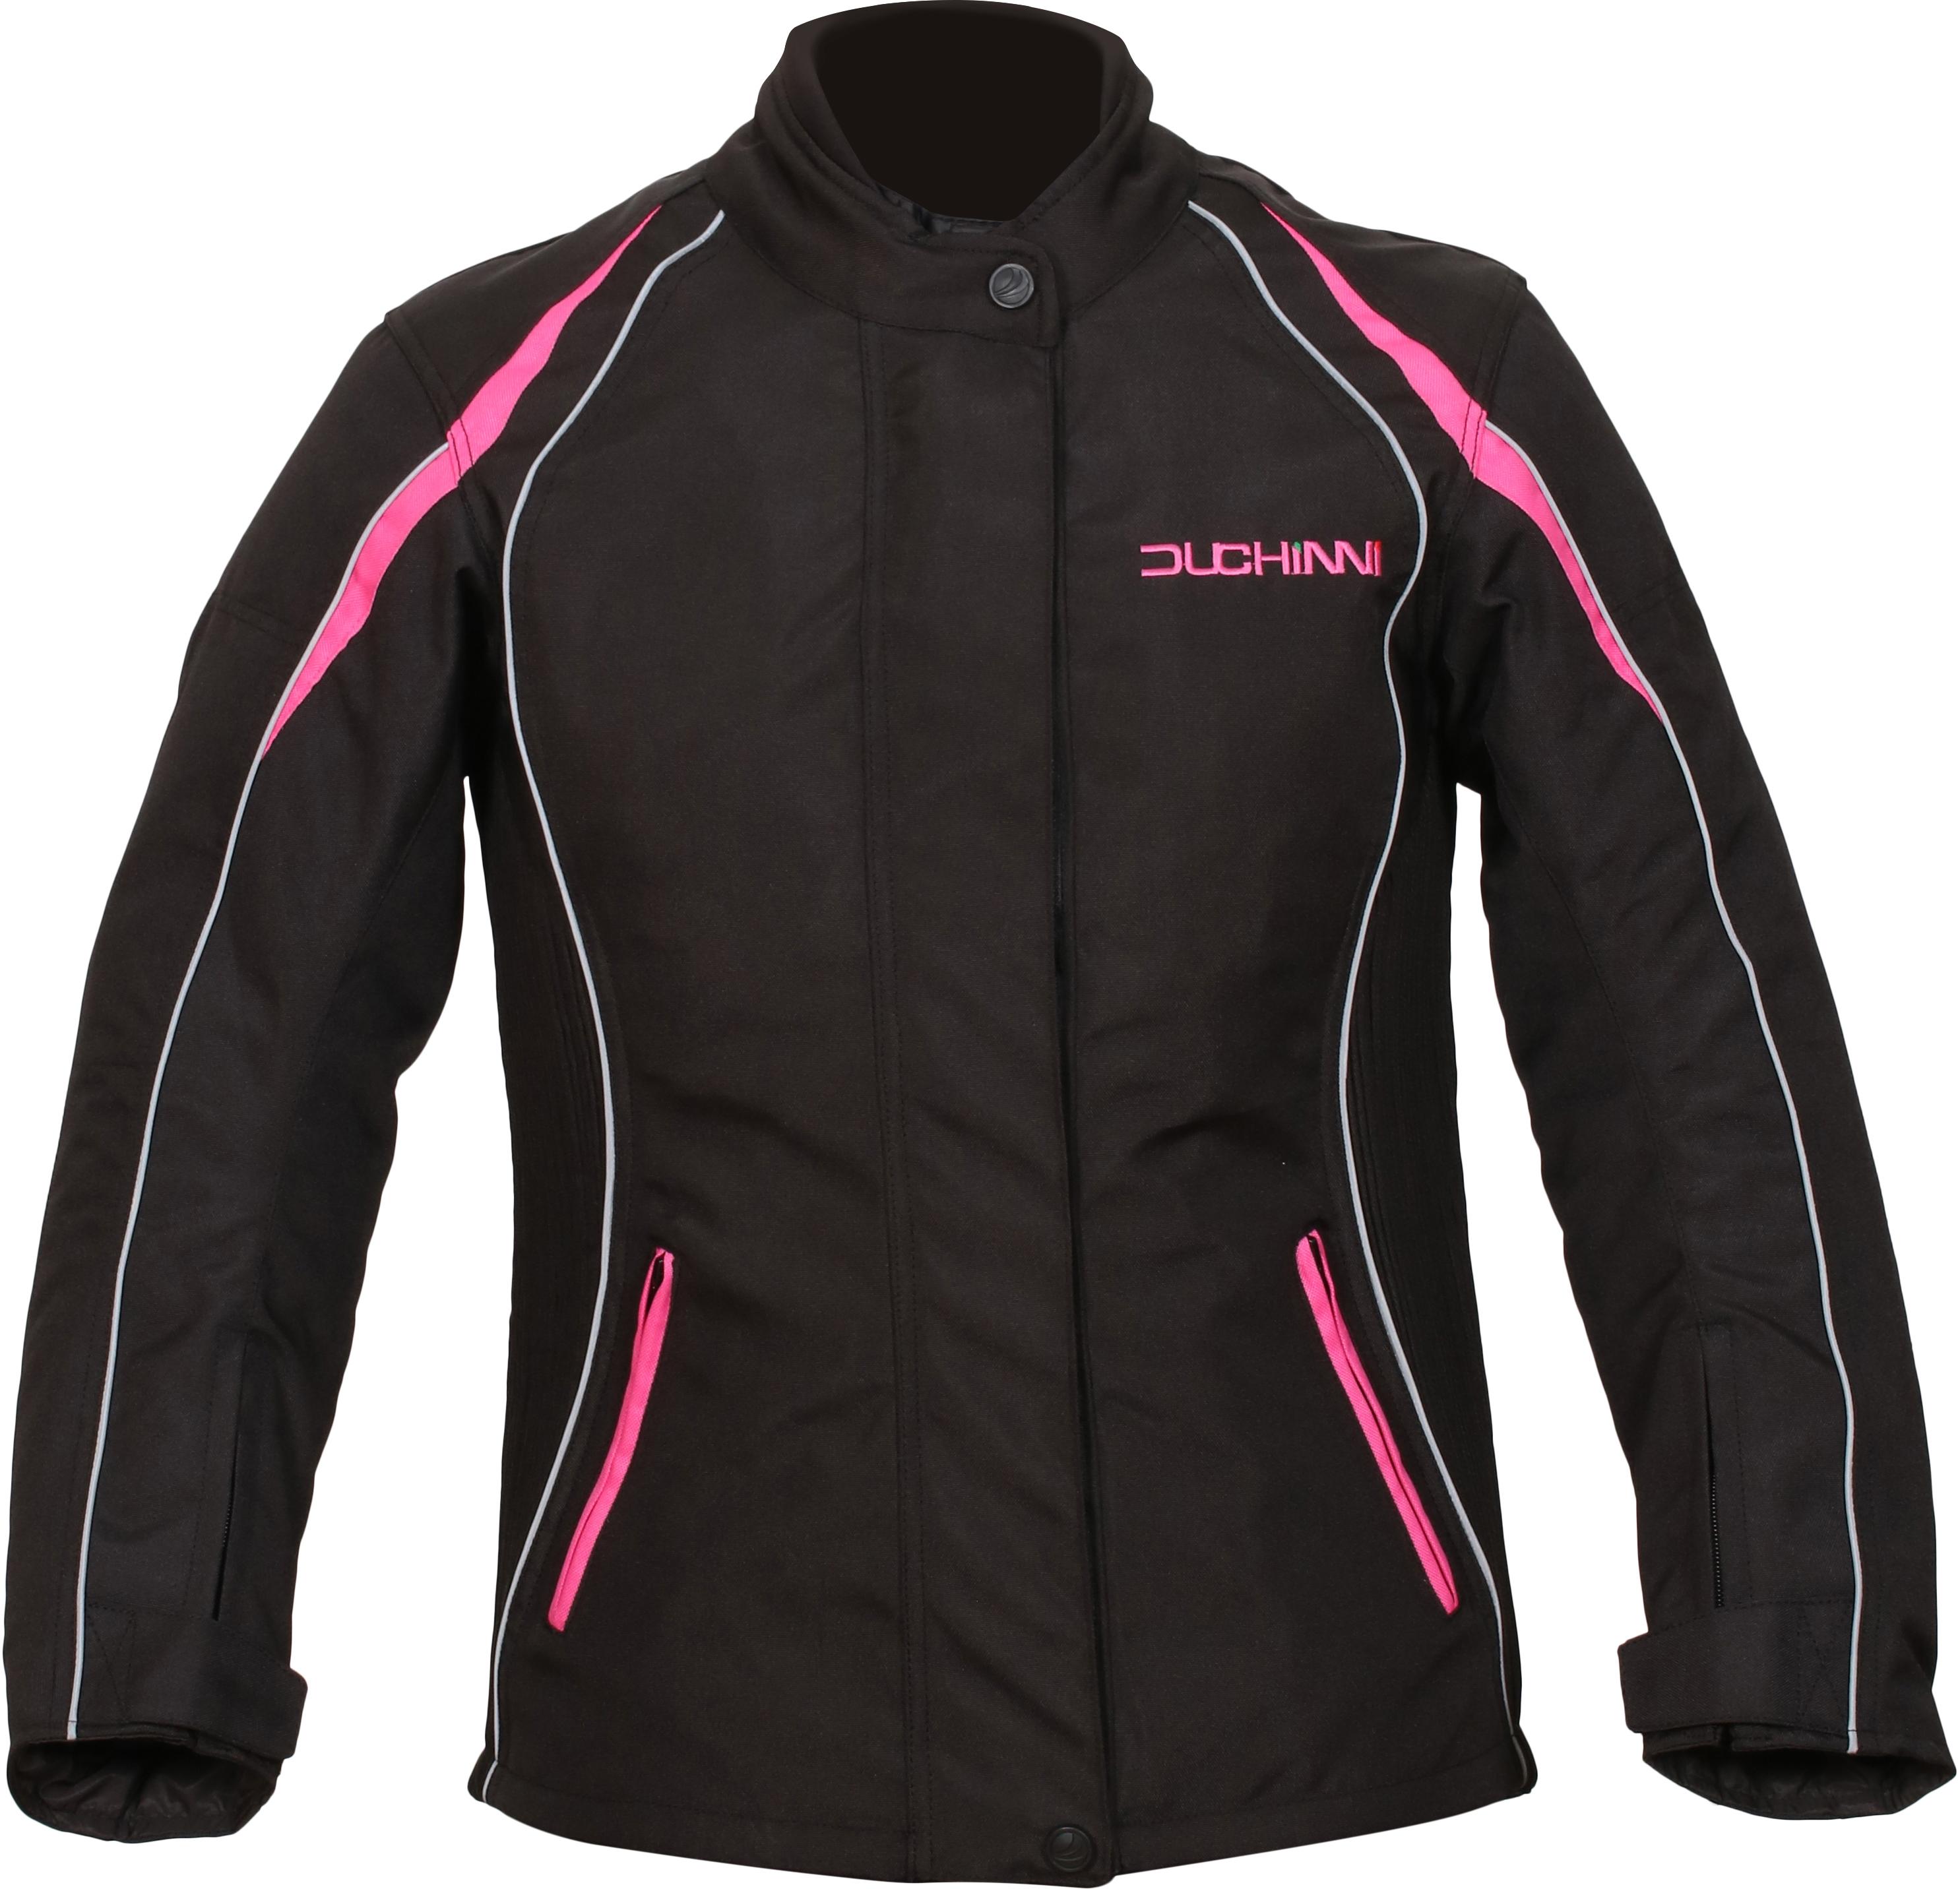 Duchinni Vienna Ladies Motorcycle Jacket - Black And Pink, 20